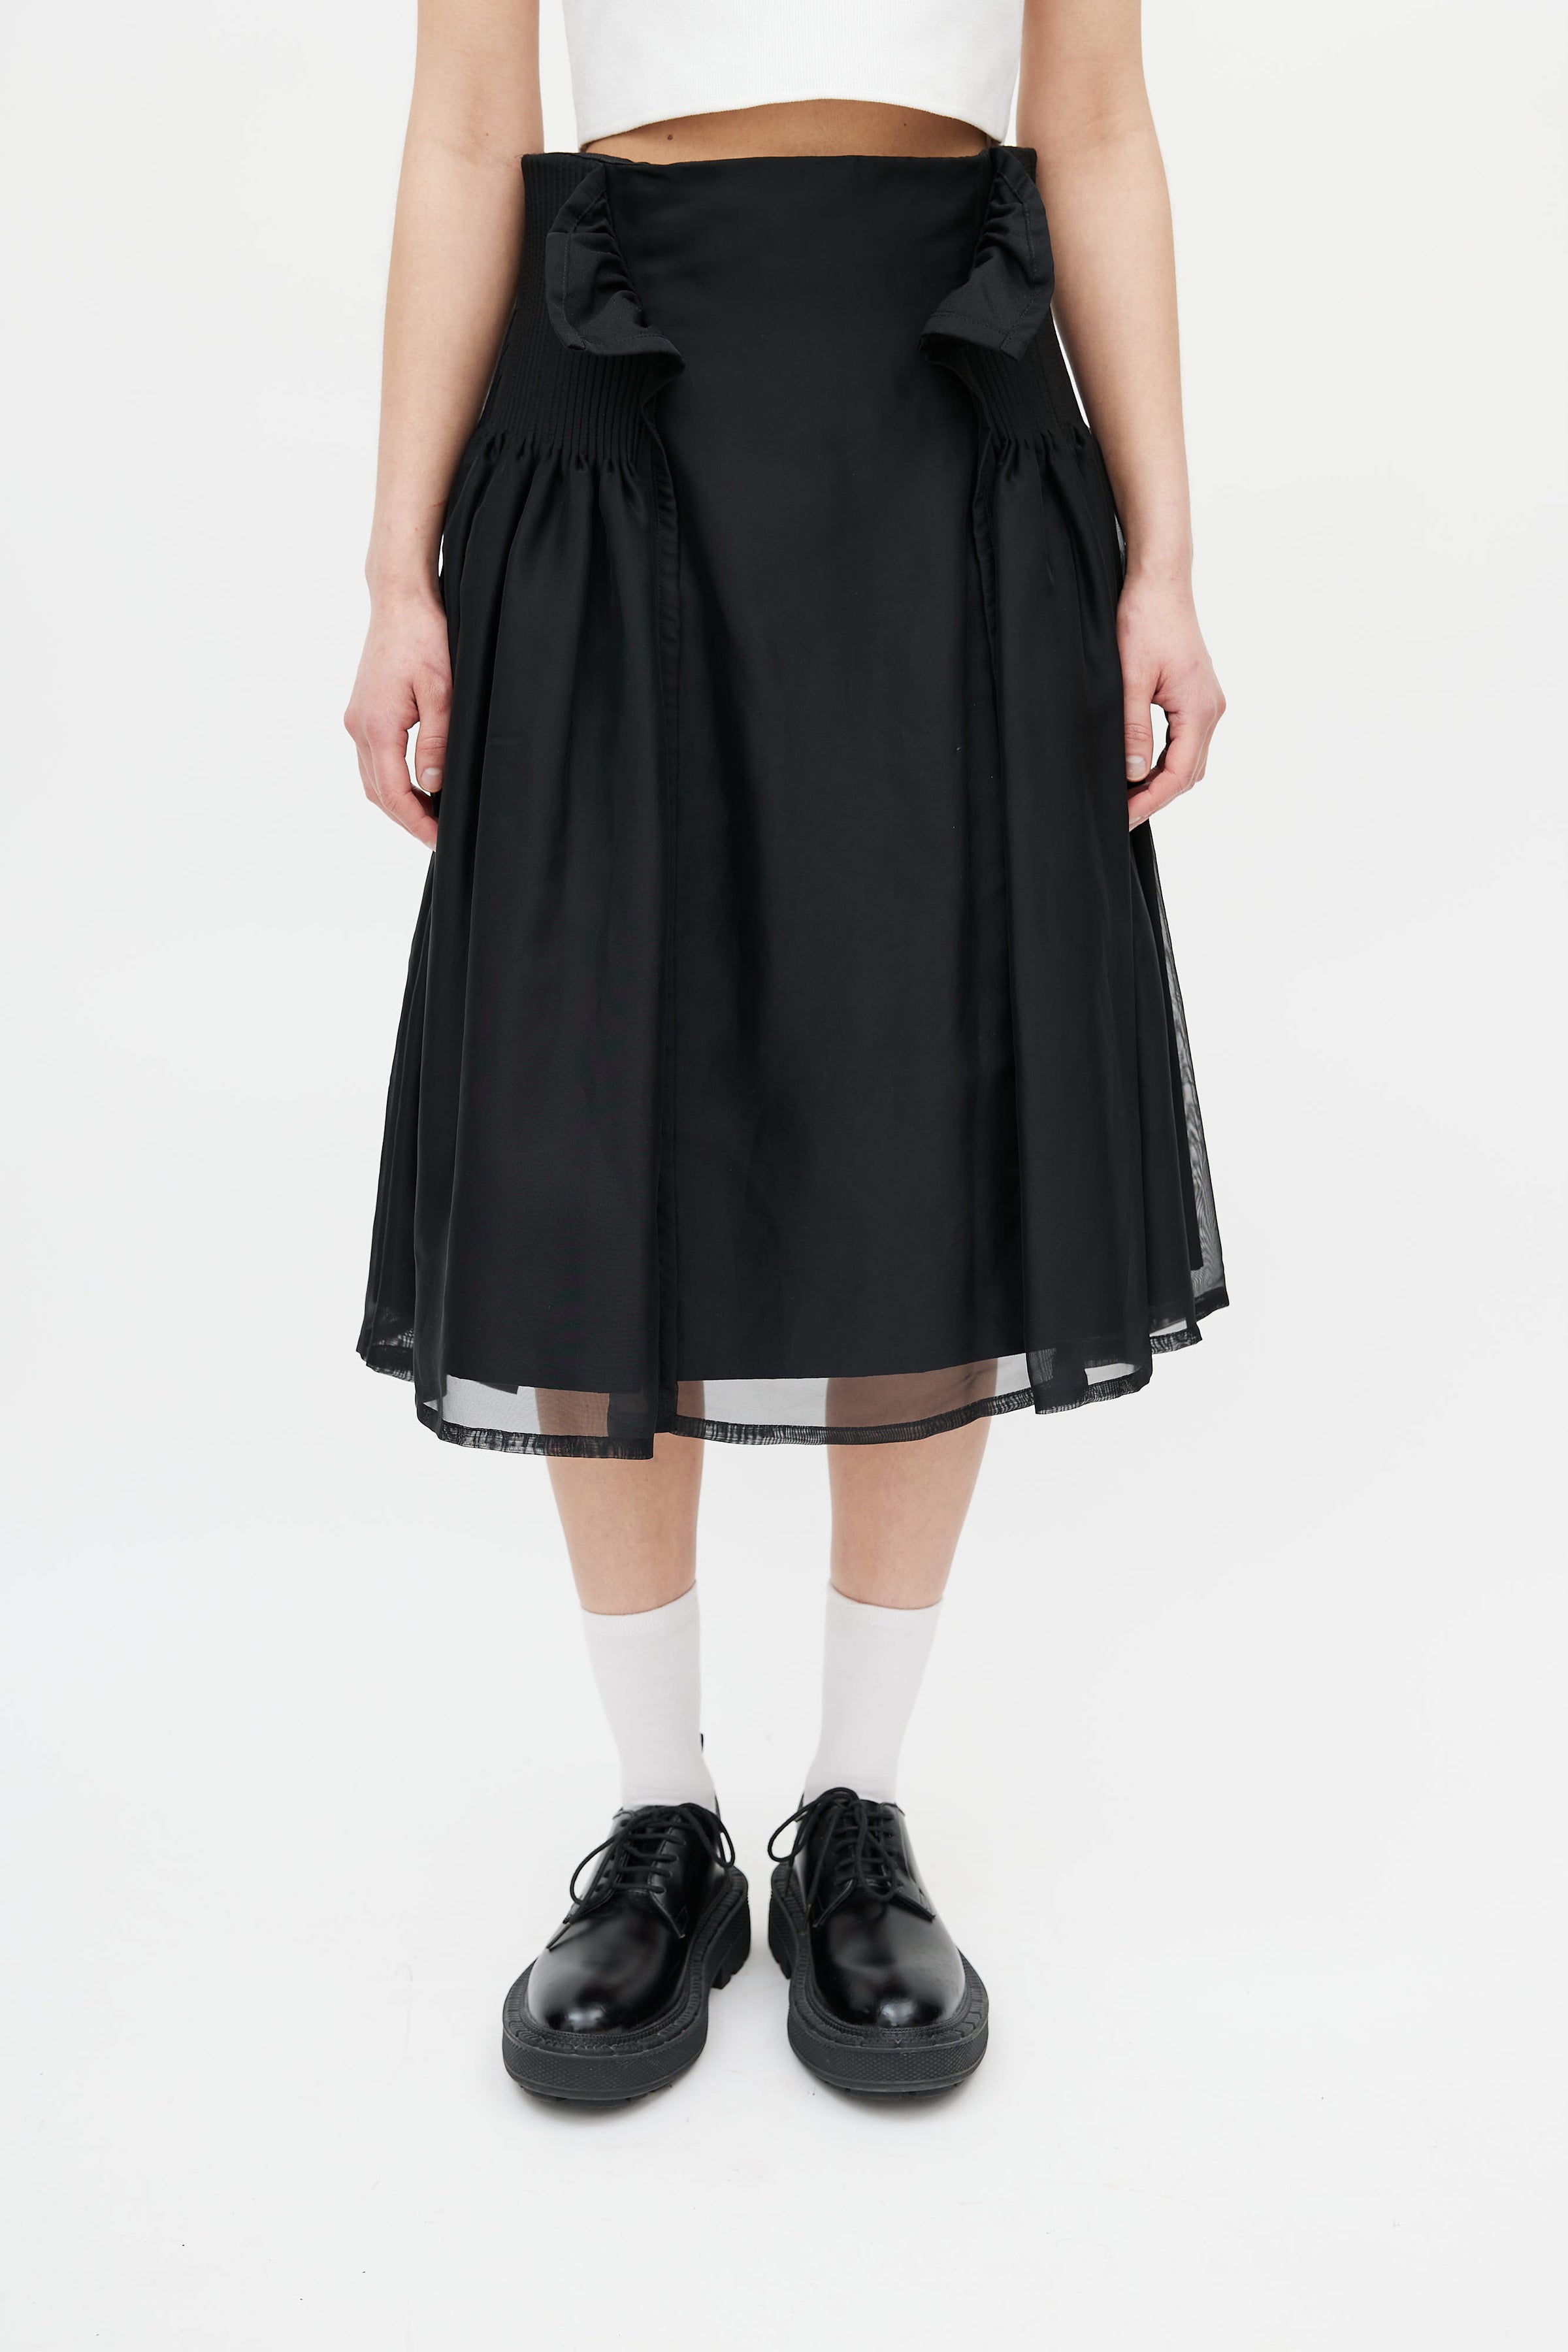 Noir Kei Ninomiya // Black Pleated Overlay Skirt – VSP Consignment